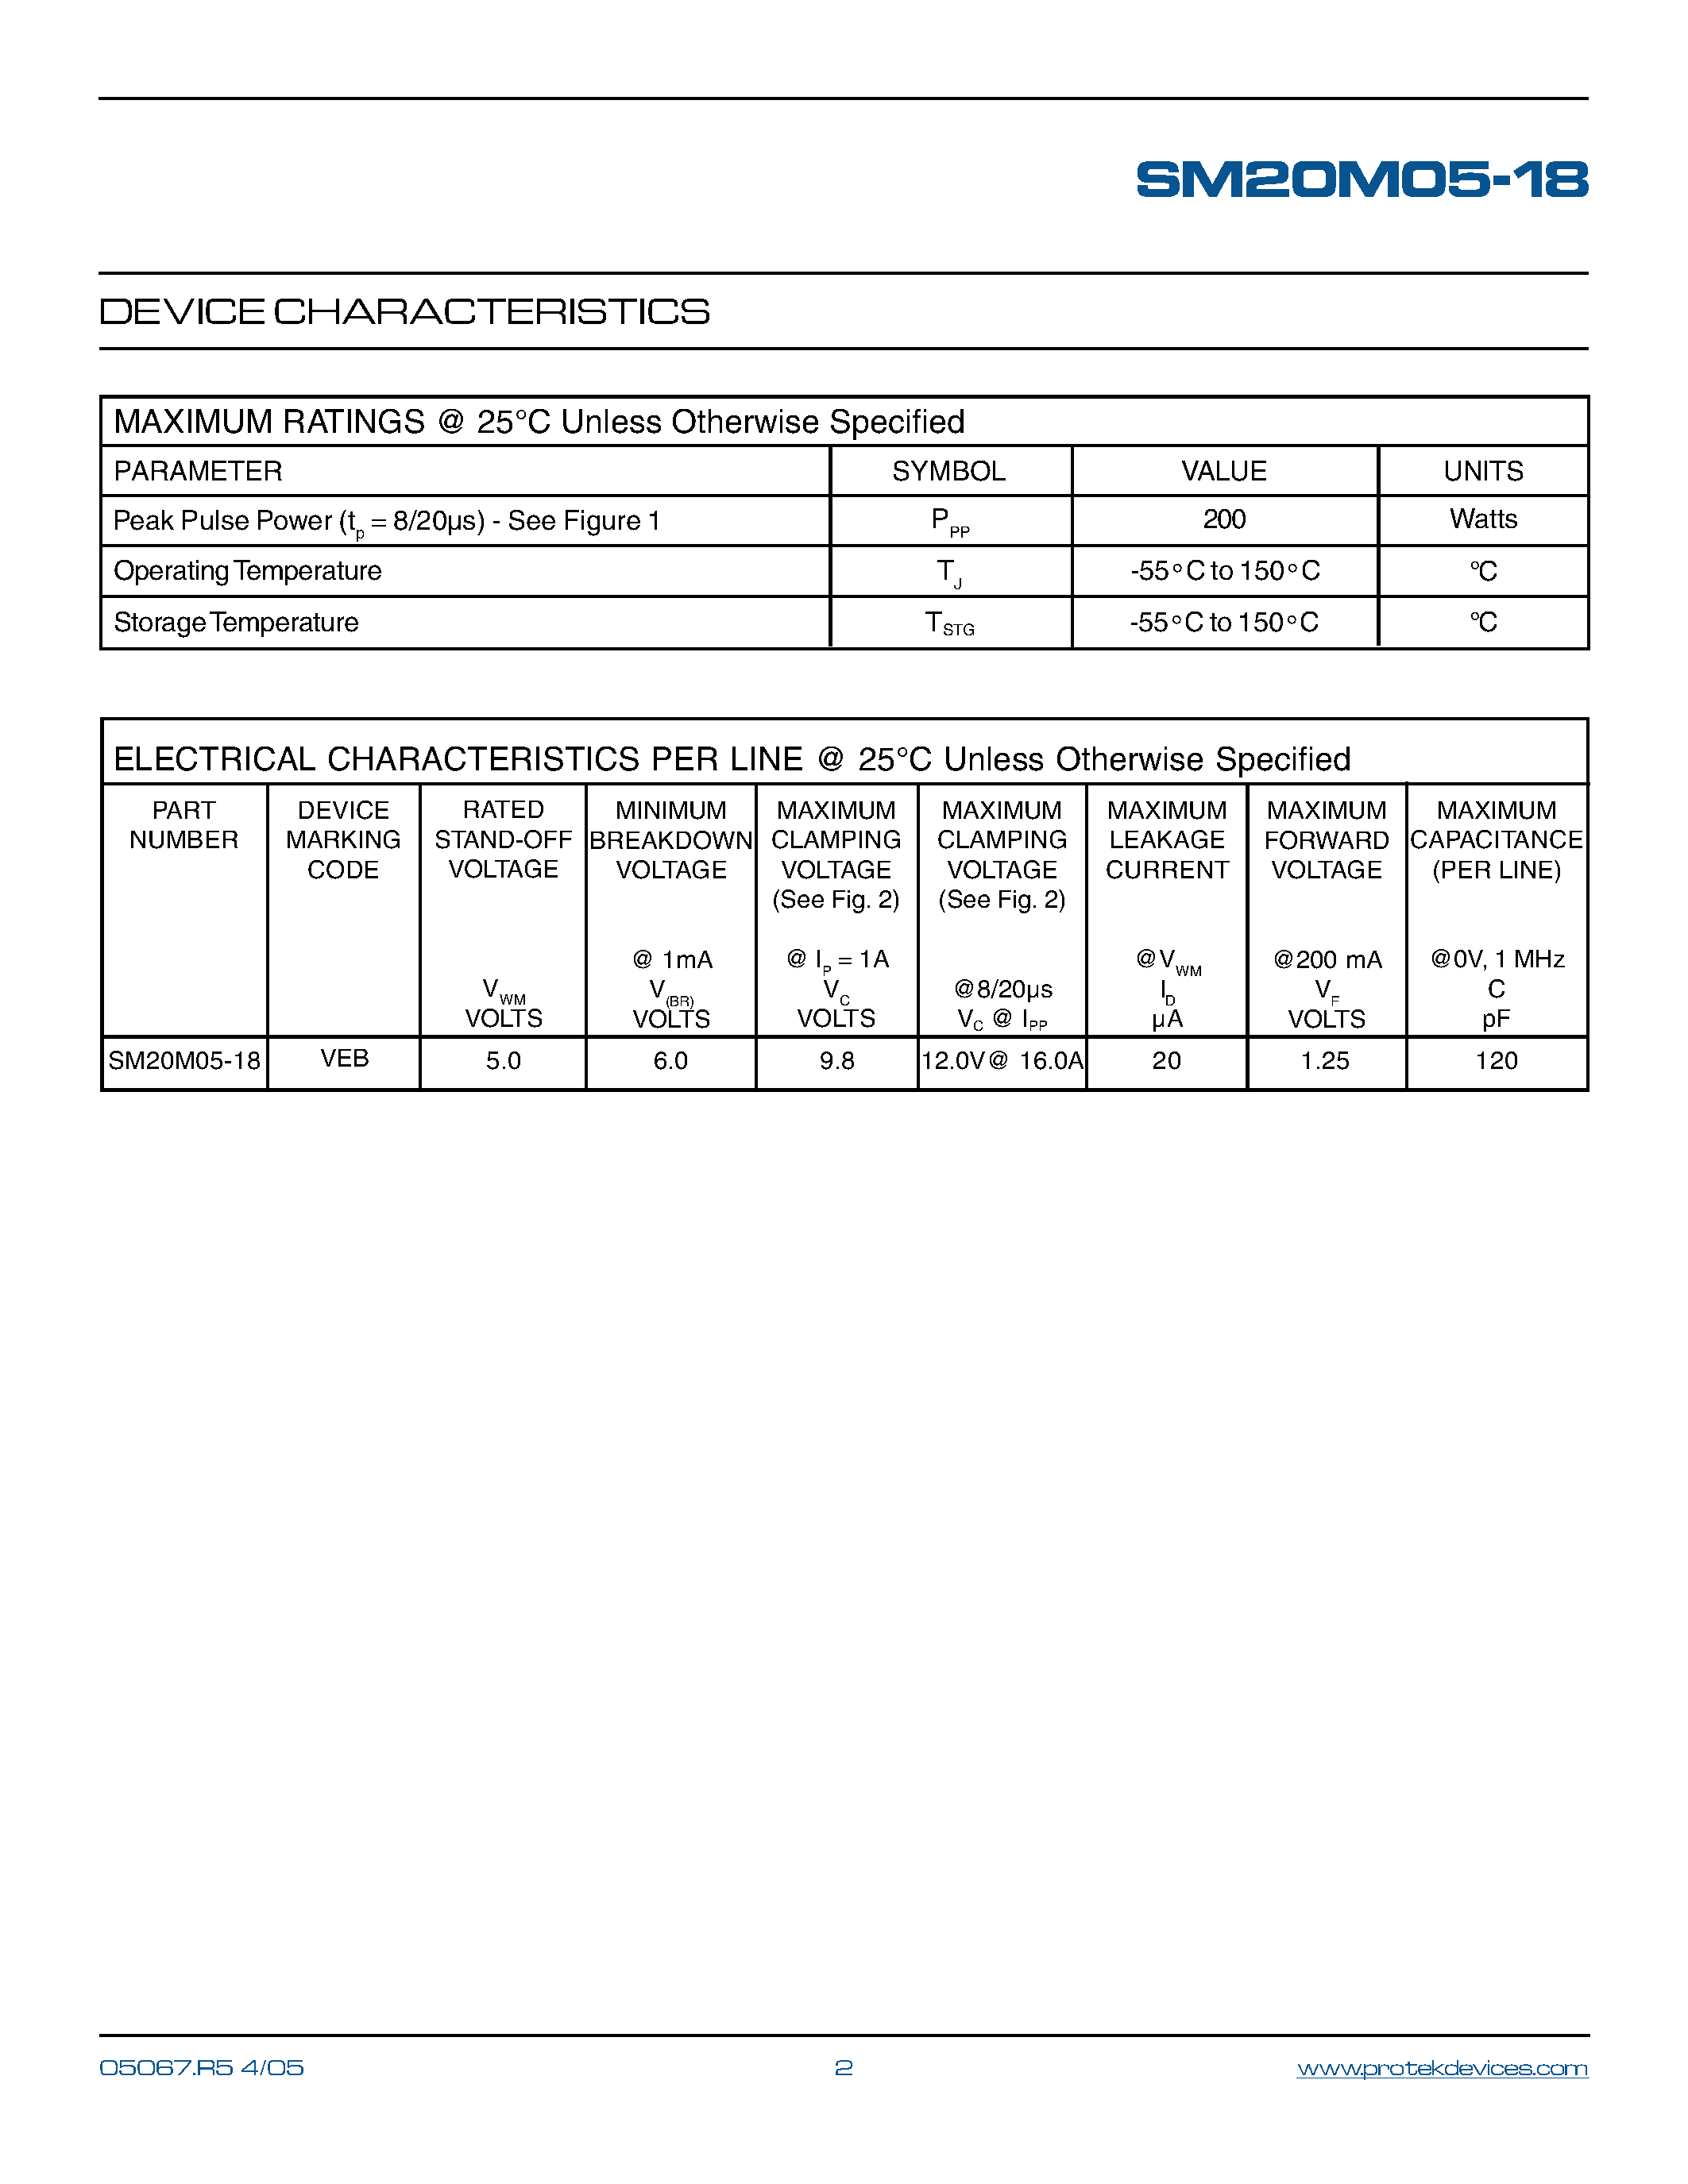 Datasheet SM20M05-18 - STANDARD CAPACITANCE TVS ARRAY page 2